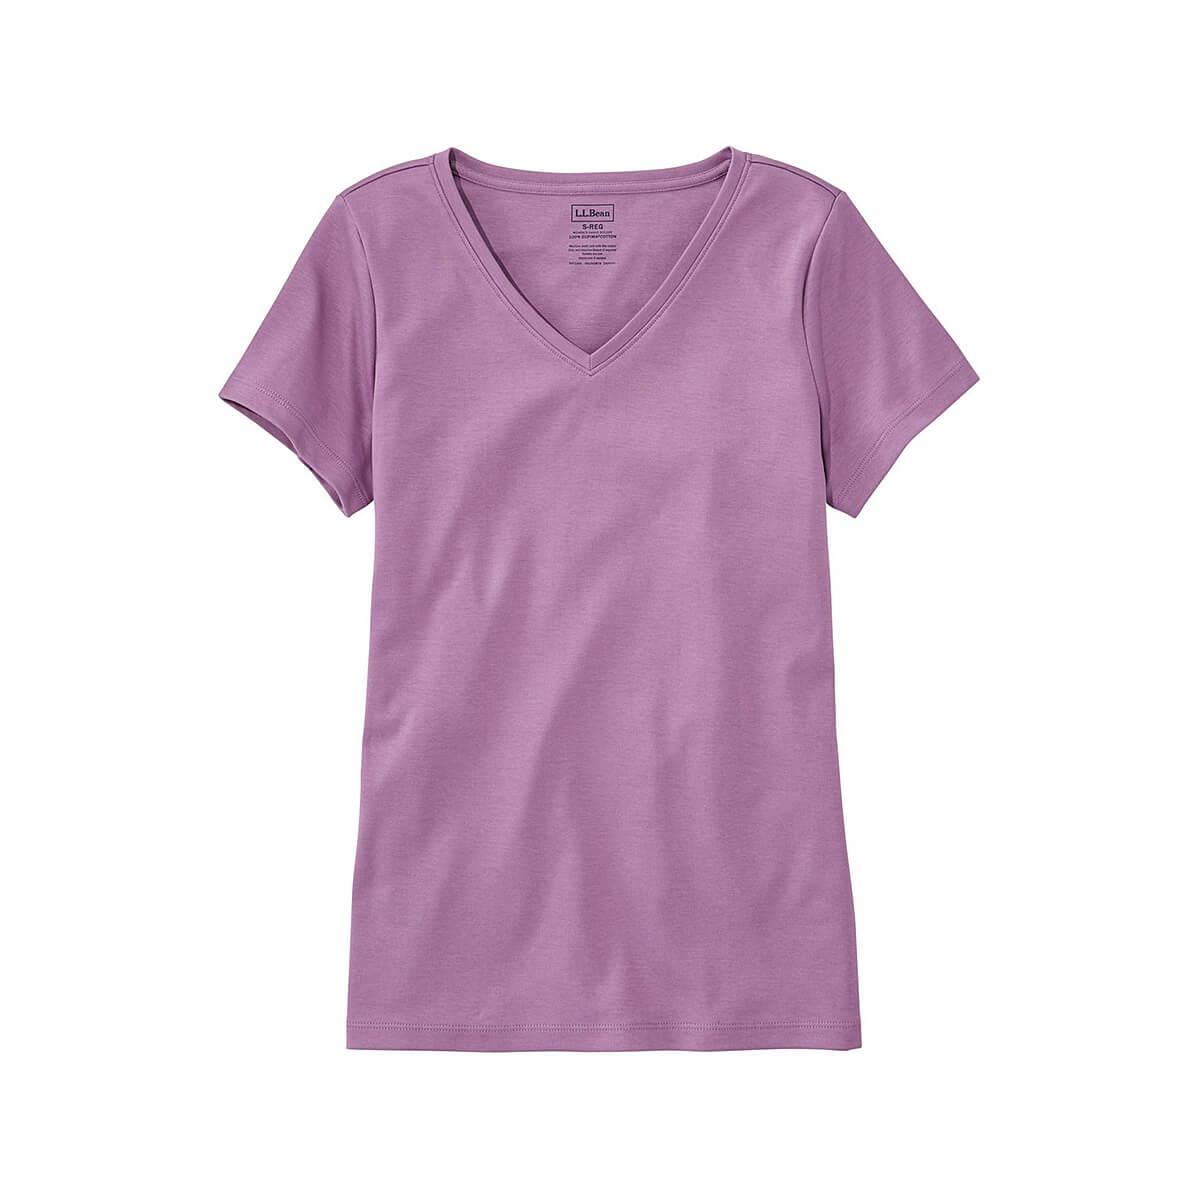 L.L.Bean Women's Short-Sleeve Pima Cotton T-Shirt